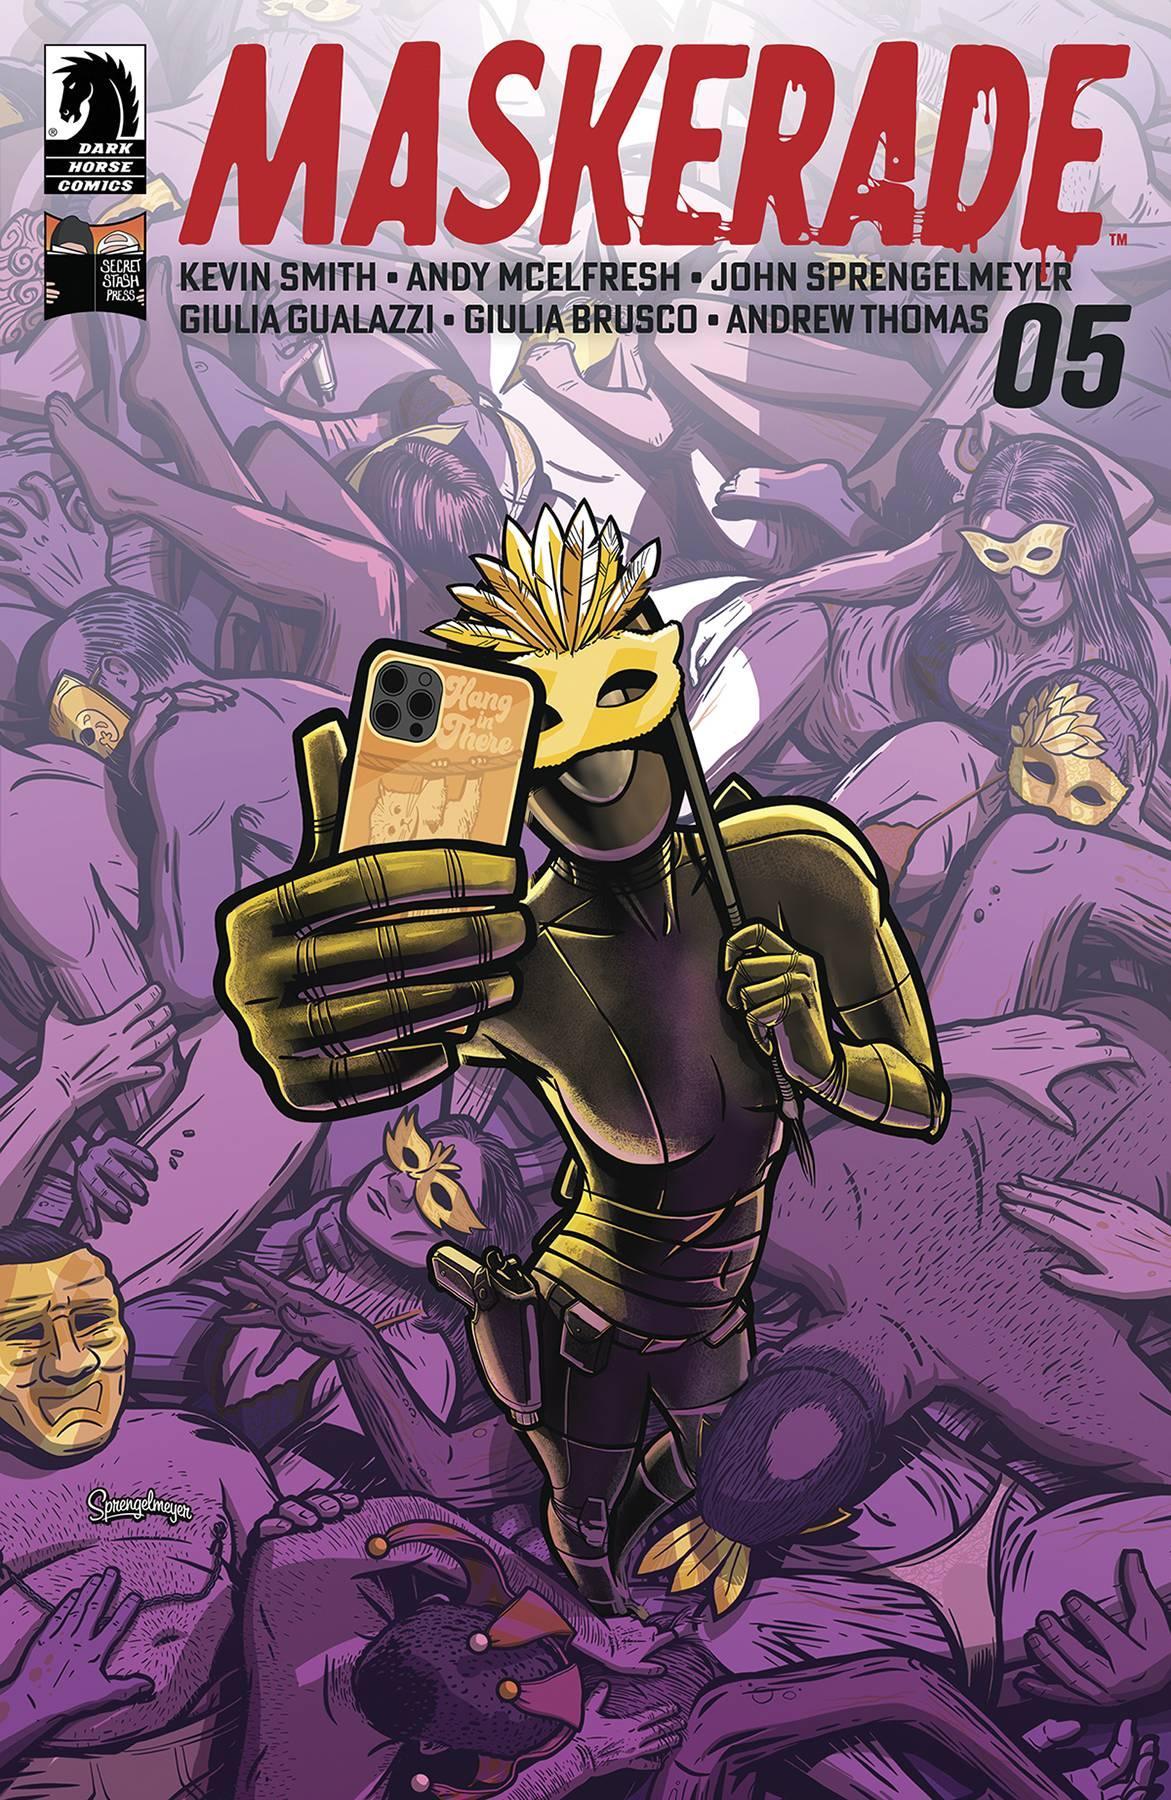 MASKERADE (2022) #5 CVR A SPRENGELMEYER & SEGALA - Kings Comics